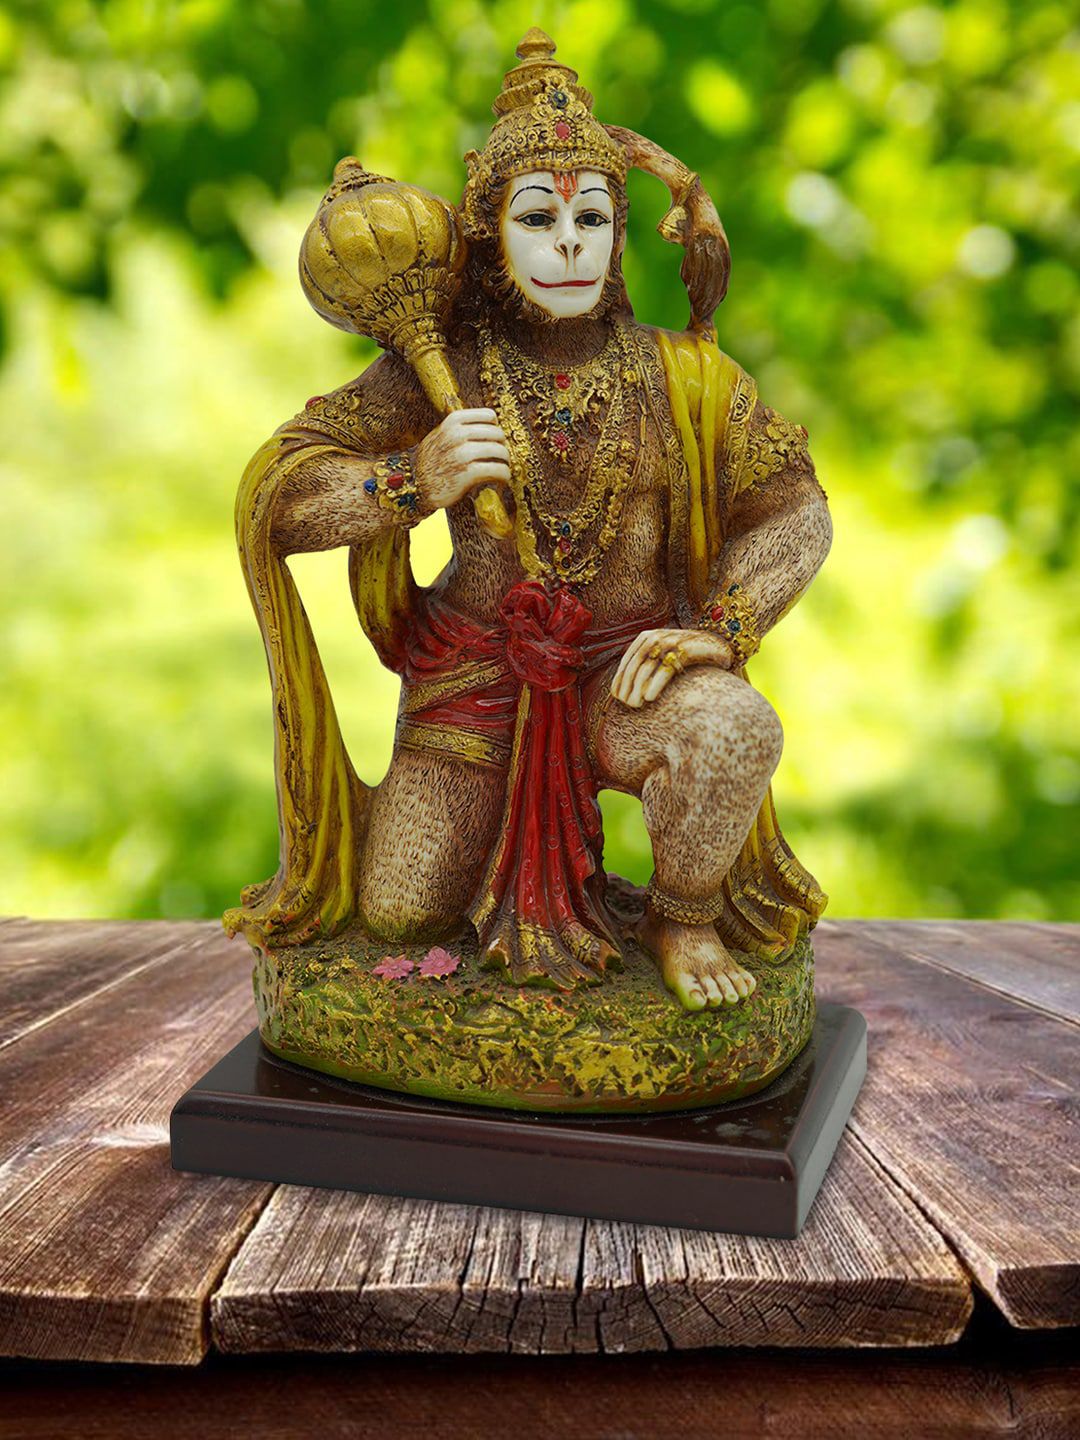 Gallery99 Gold & White Handpainted Lord Hanuman Decorative Showpiece Idol Price in India